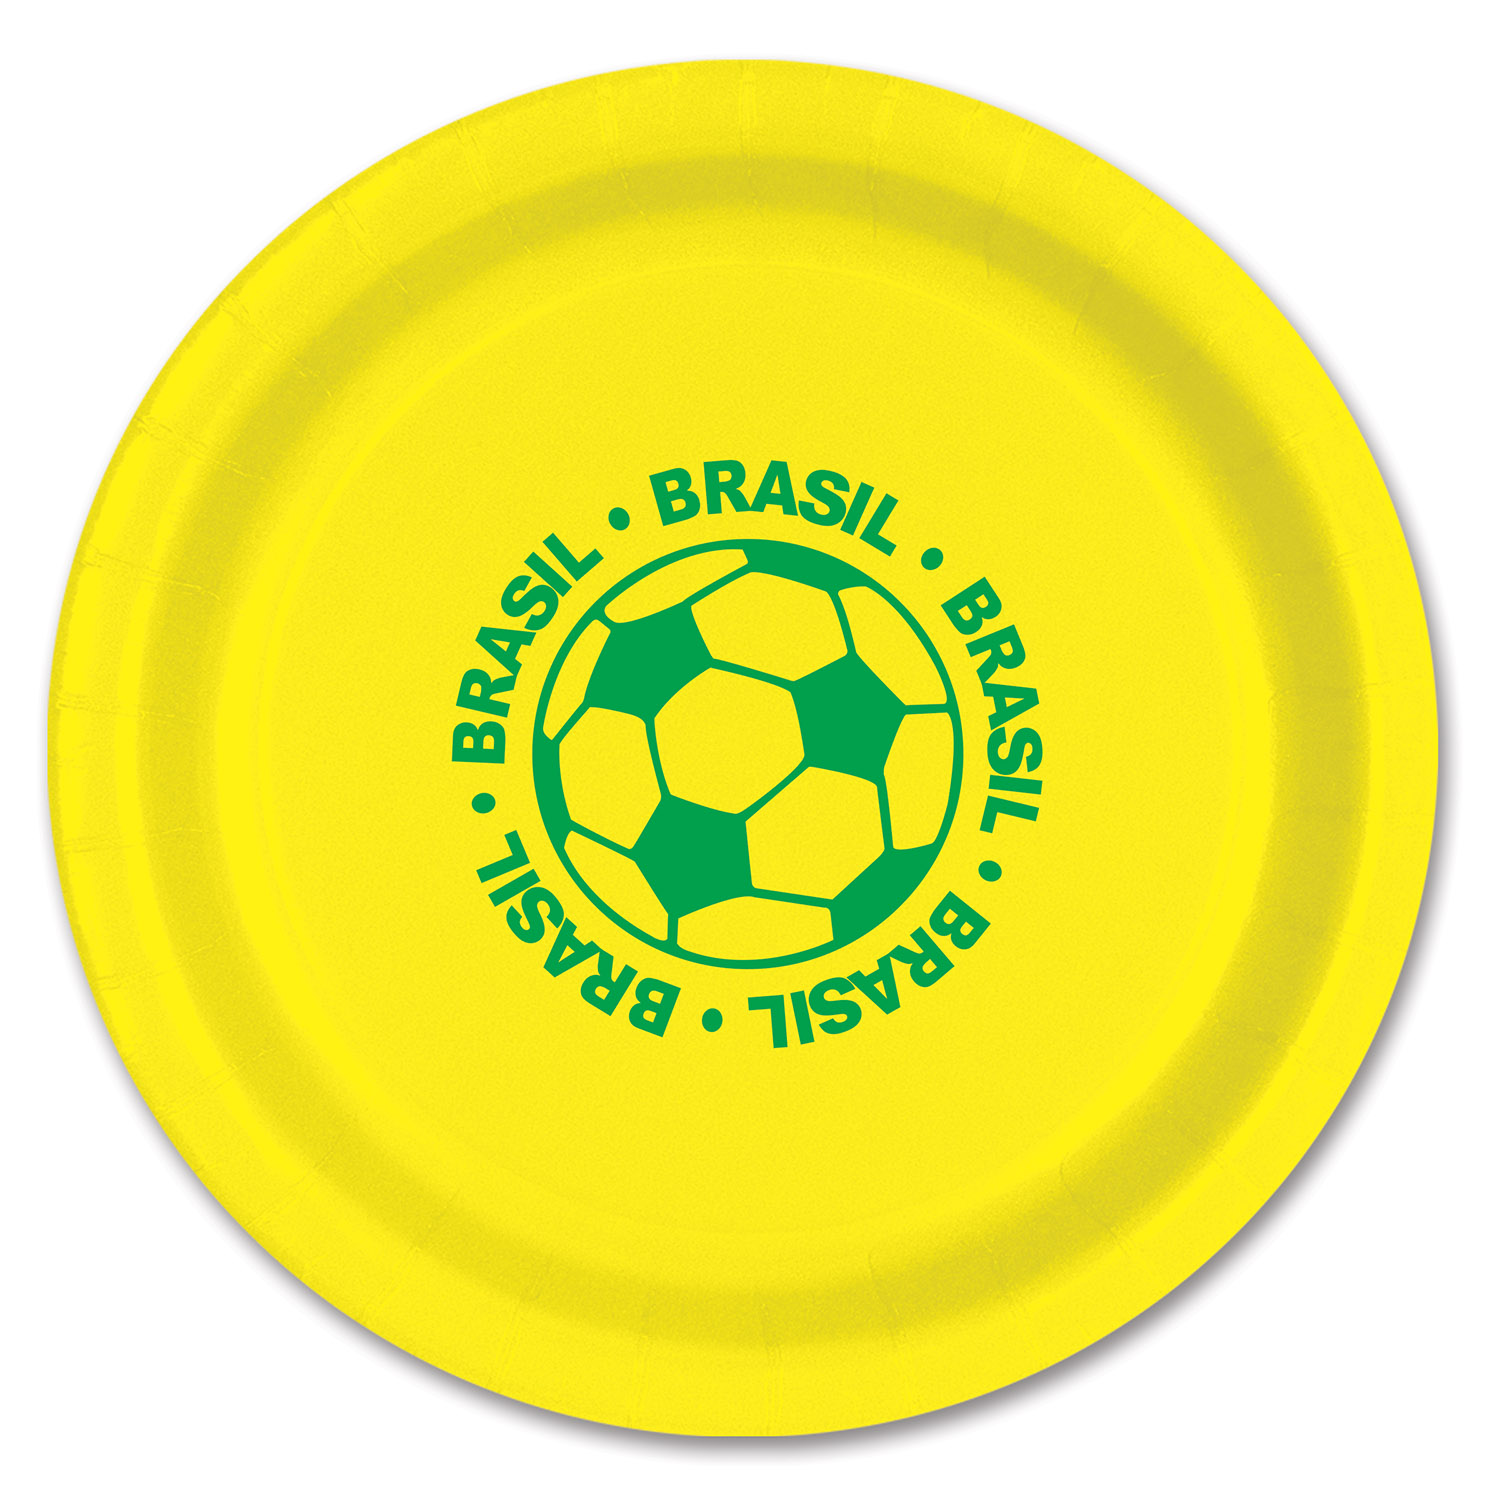 Beistle FIFA World Cup 2014 Soccer Brazil 9" Dinner Plates, Yellow Green, 8 Pack